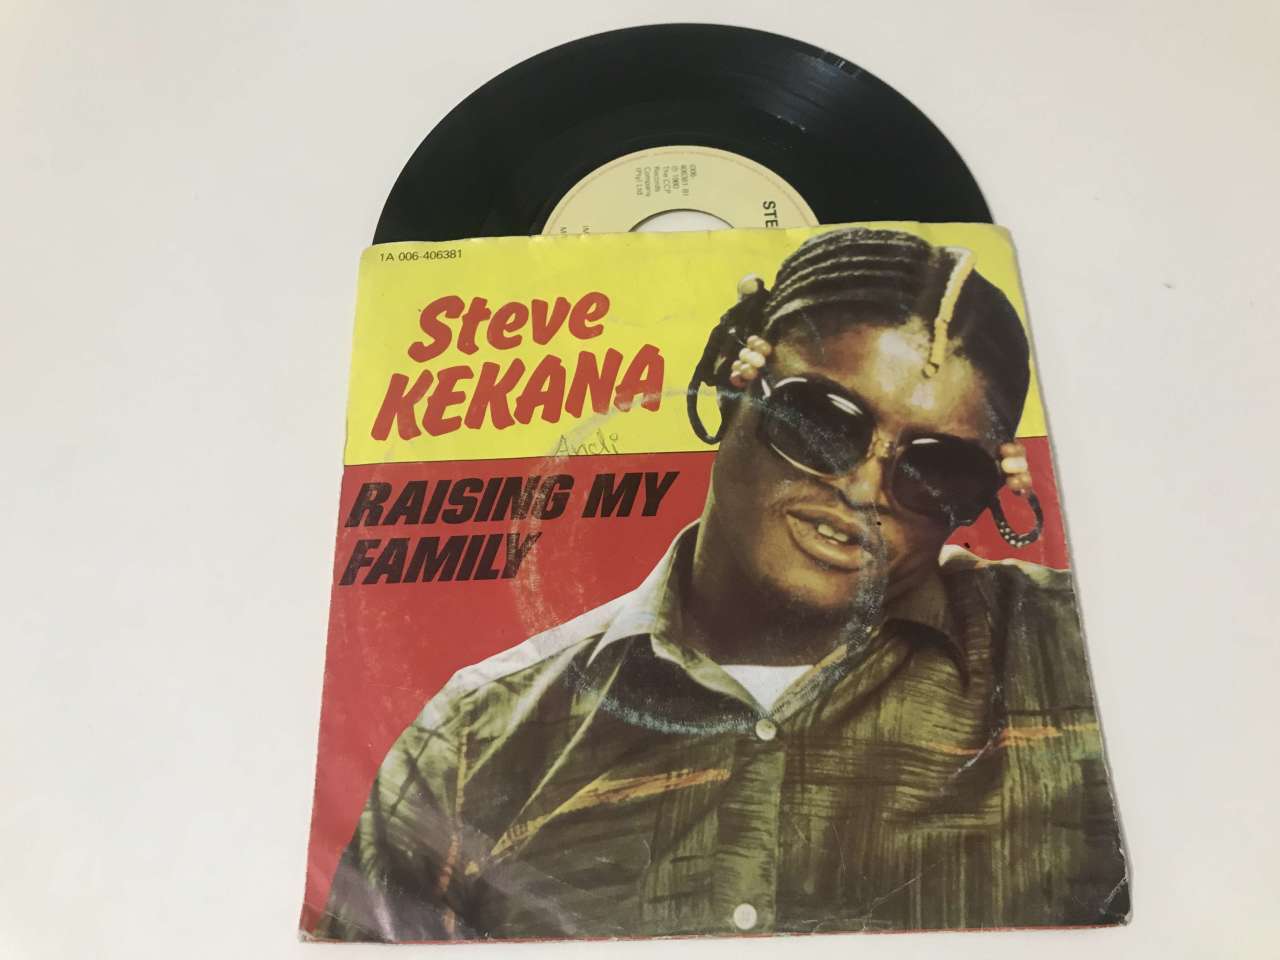 Steve Kekana – Raising My Family